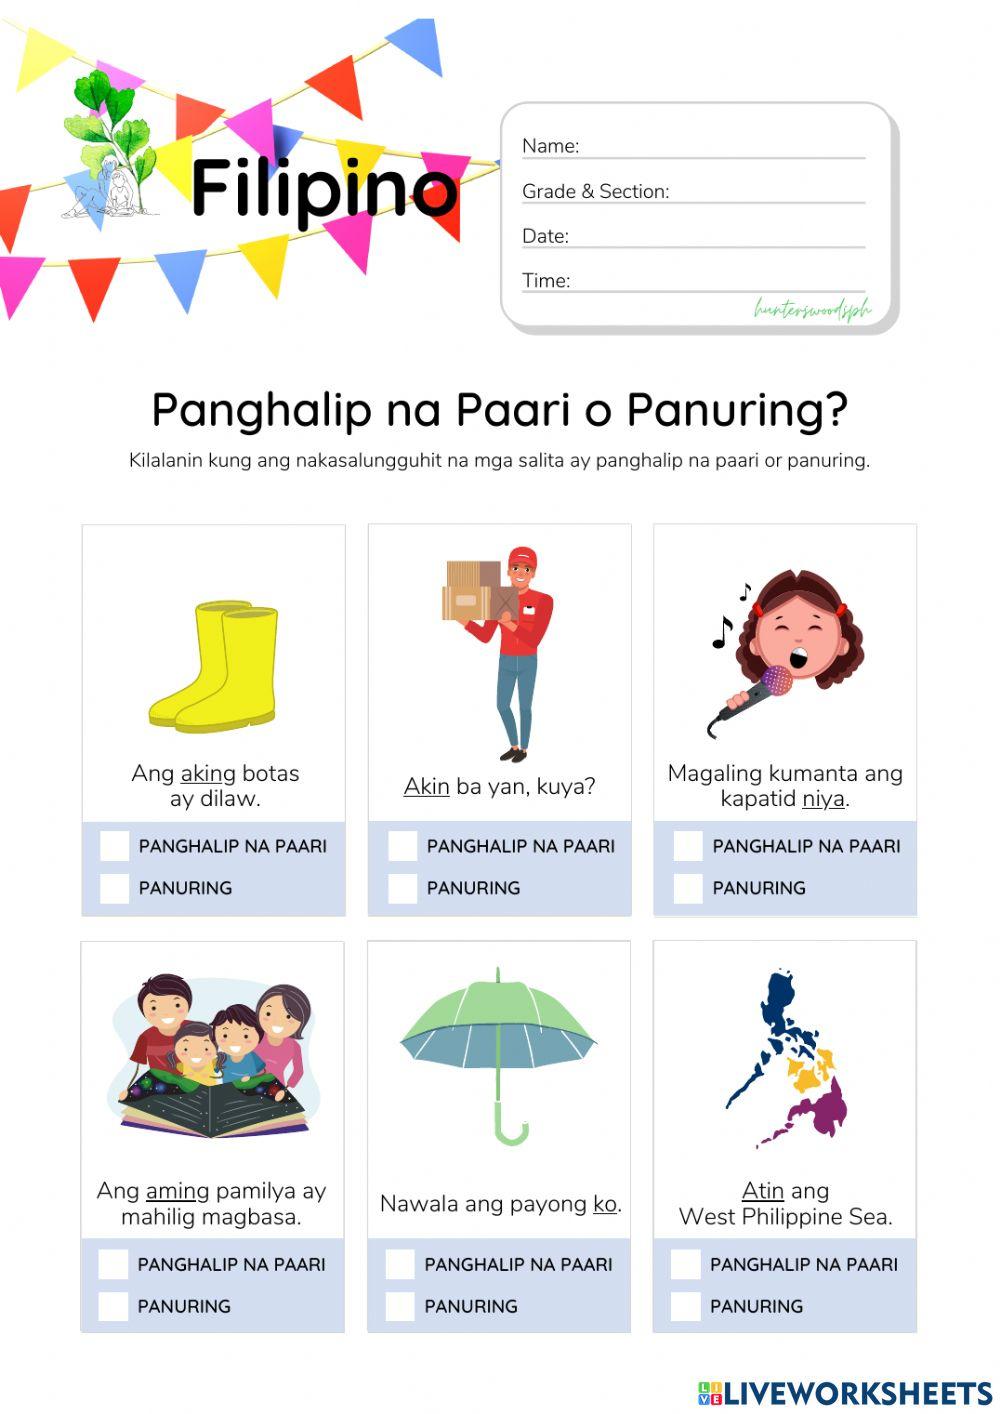 Panghalip na Paari Worksheet (HuntersWoodsPH Filipino)